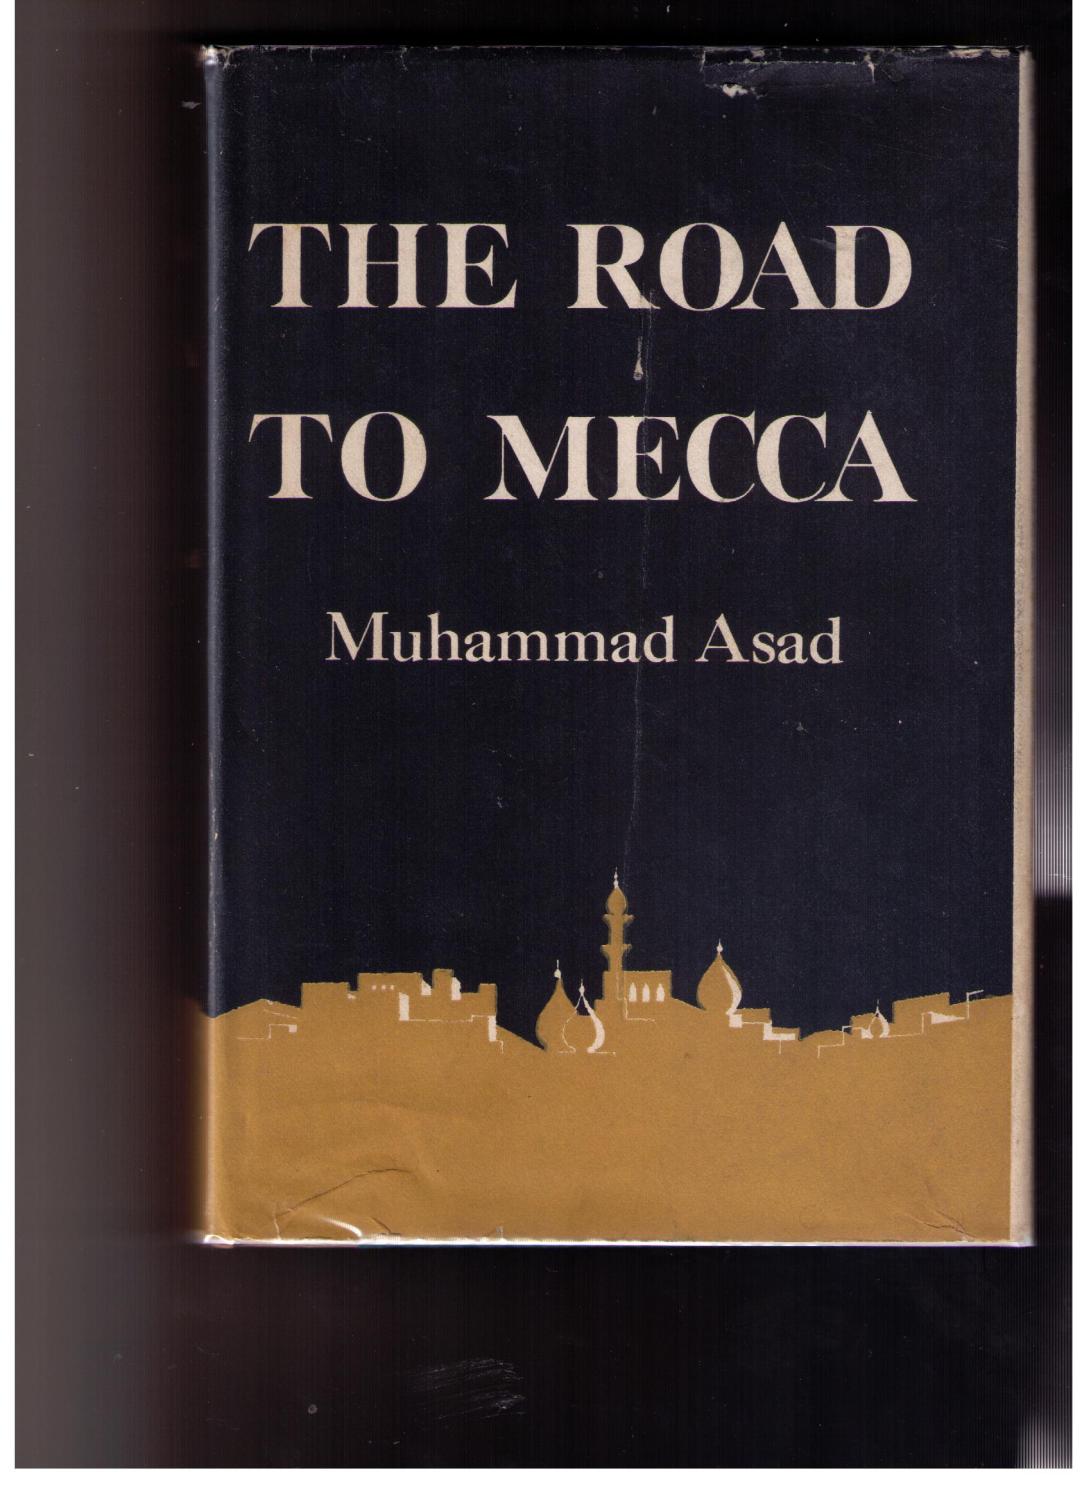 15 Best Islamic Books Every Muslim Should Read  